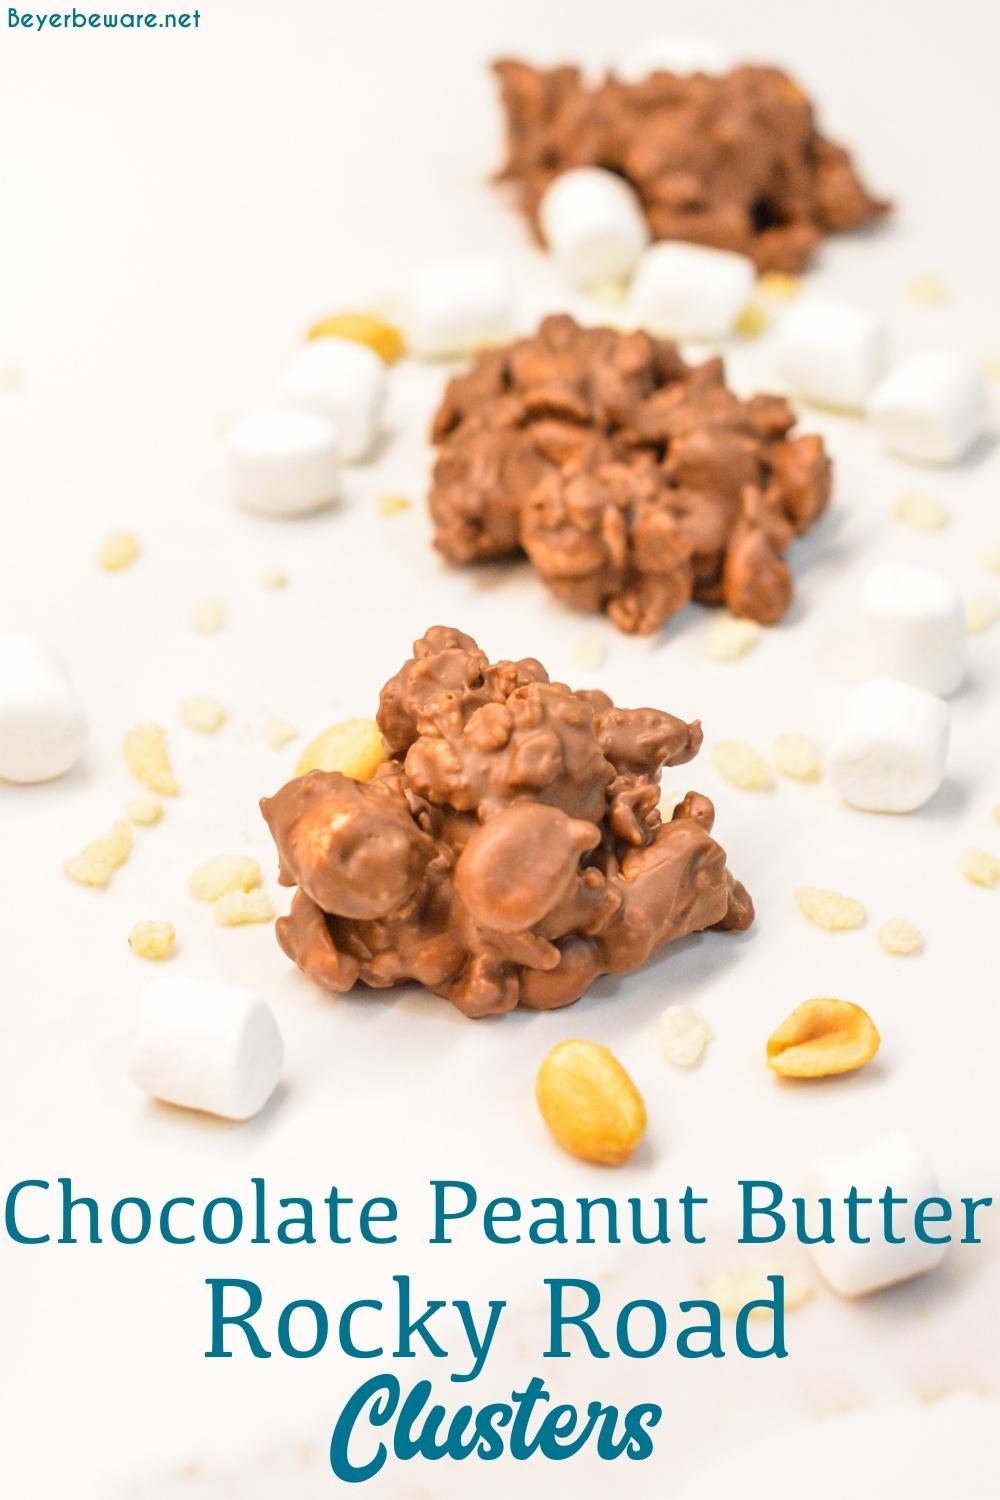 Chocolate-Marshmallow-Peanut Clusters